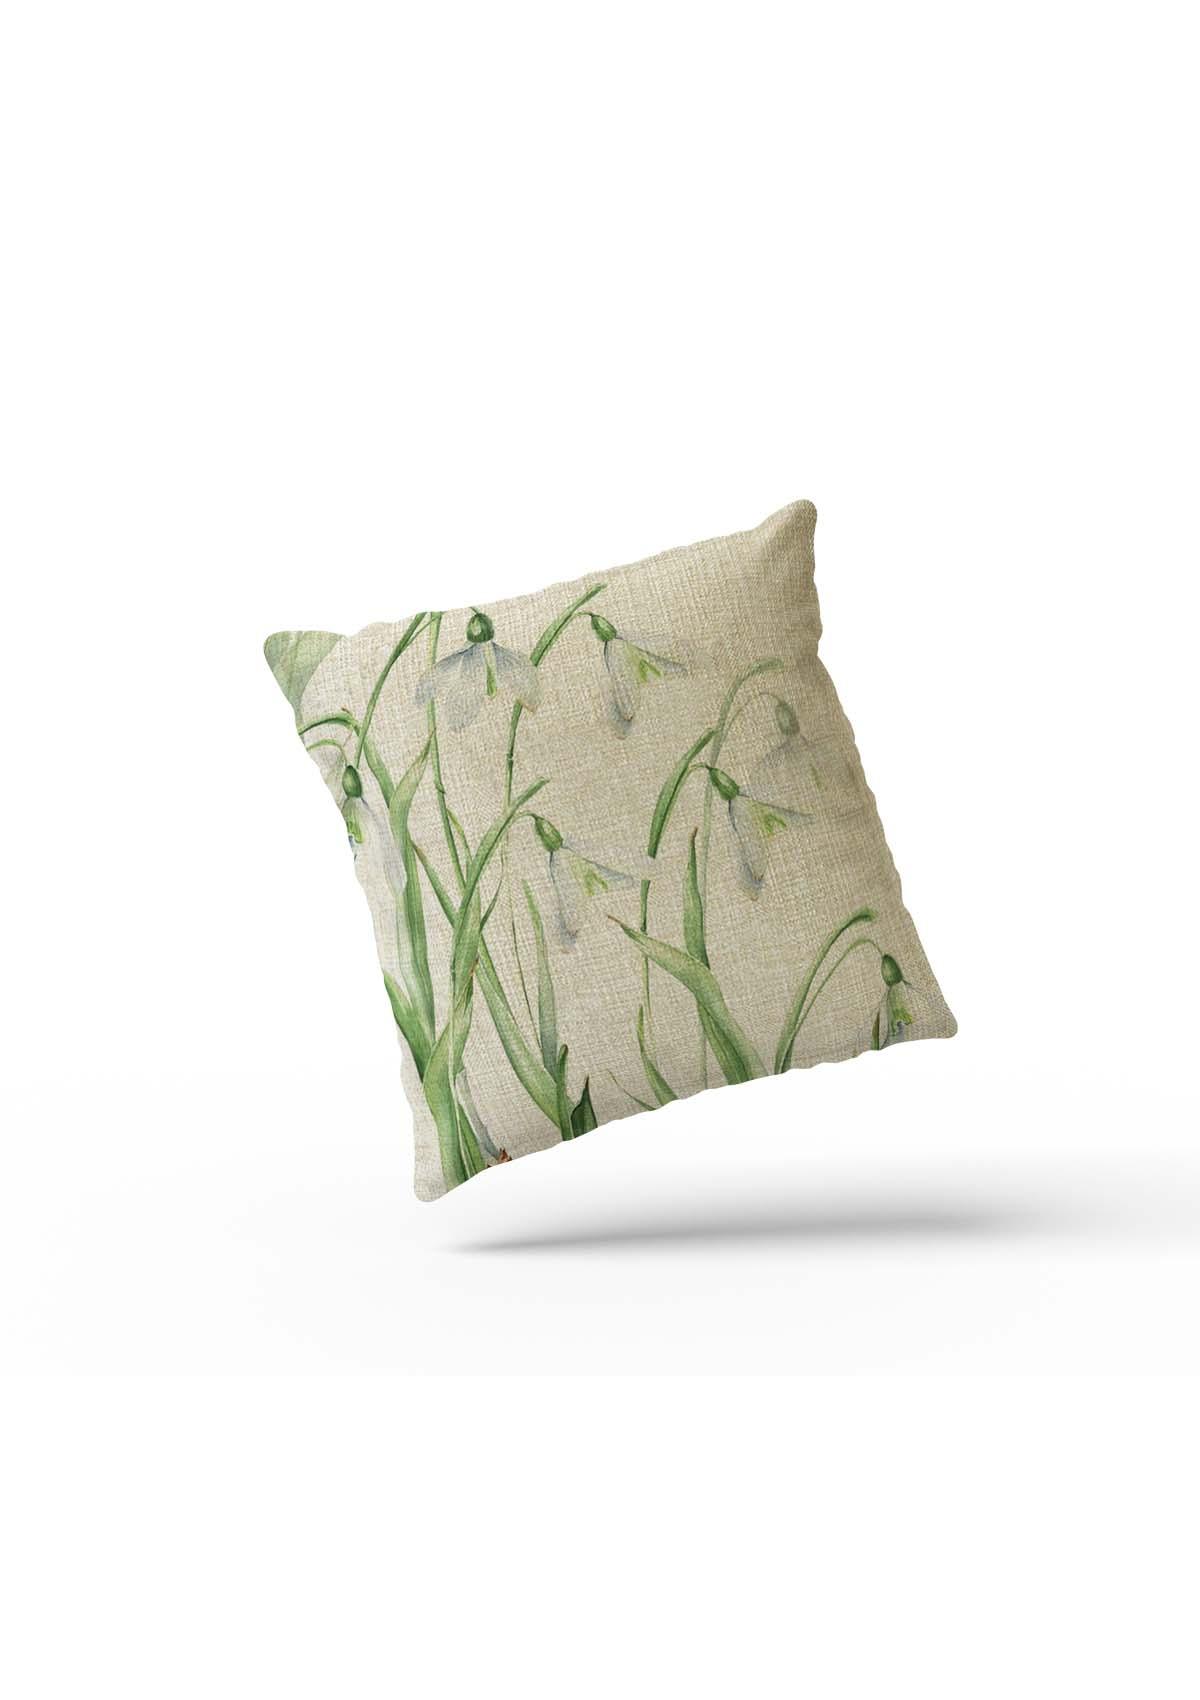 Snowdrop Cushion Cover - Exquisite Floral Pillow Case | Shop Floral Cushion Covers